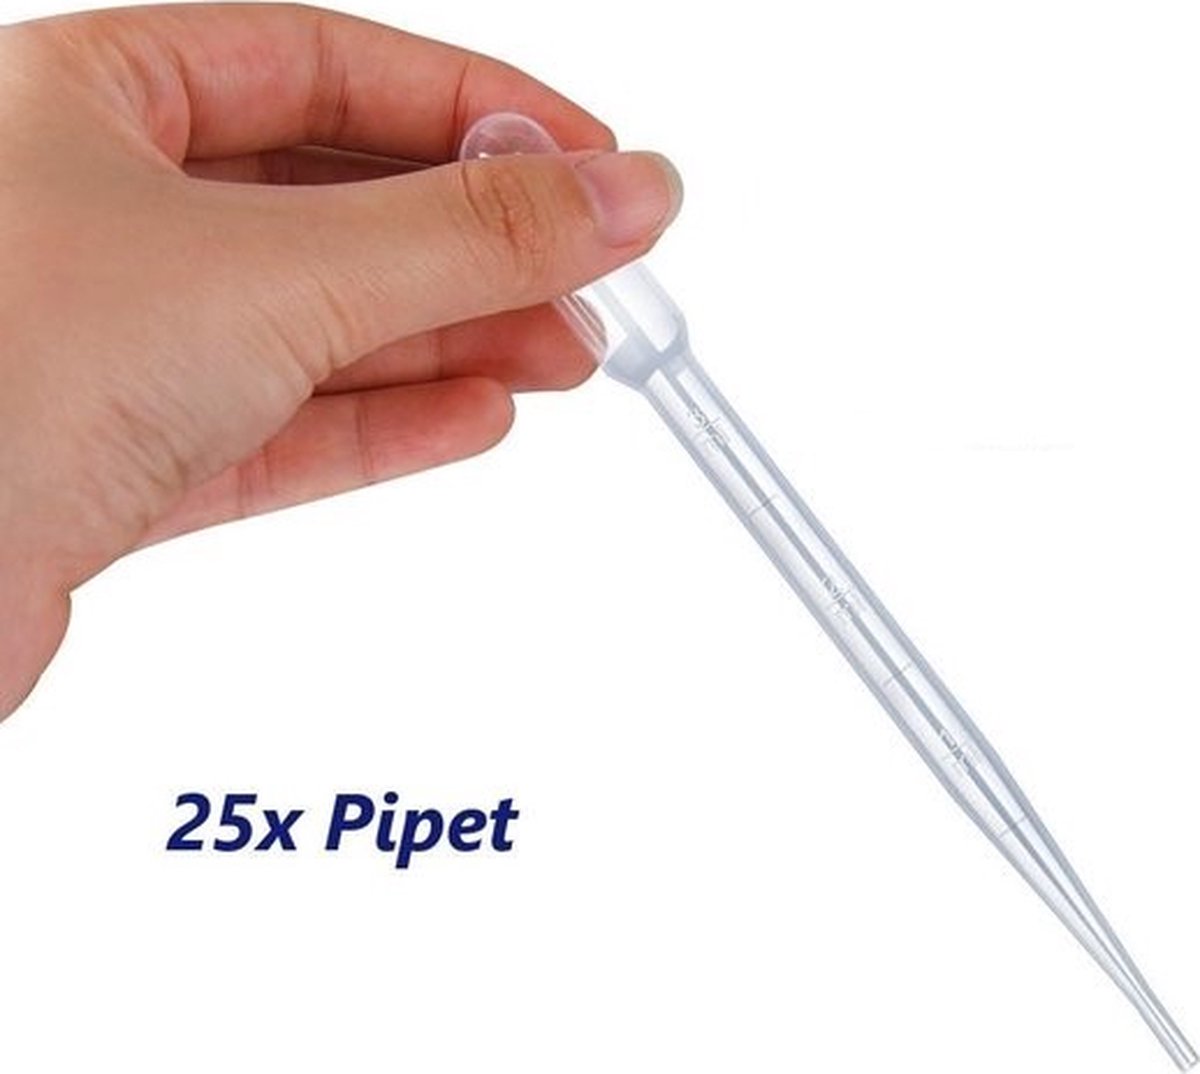 Christian Deluxe 25 stuks set pipet - 3ml - pipet voor vloeistoffen - doseerpipet - plastic pipet - pasteur pipet - whisky pipet